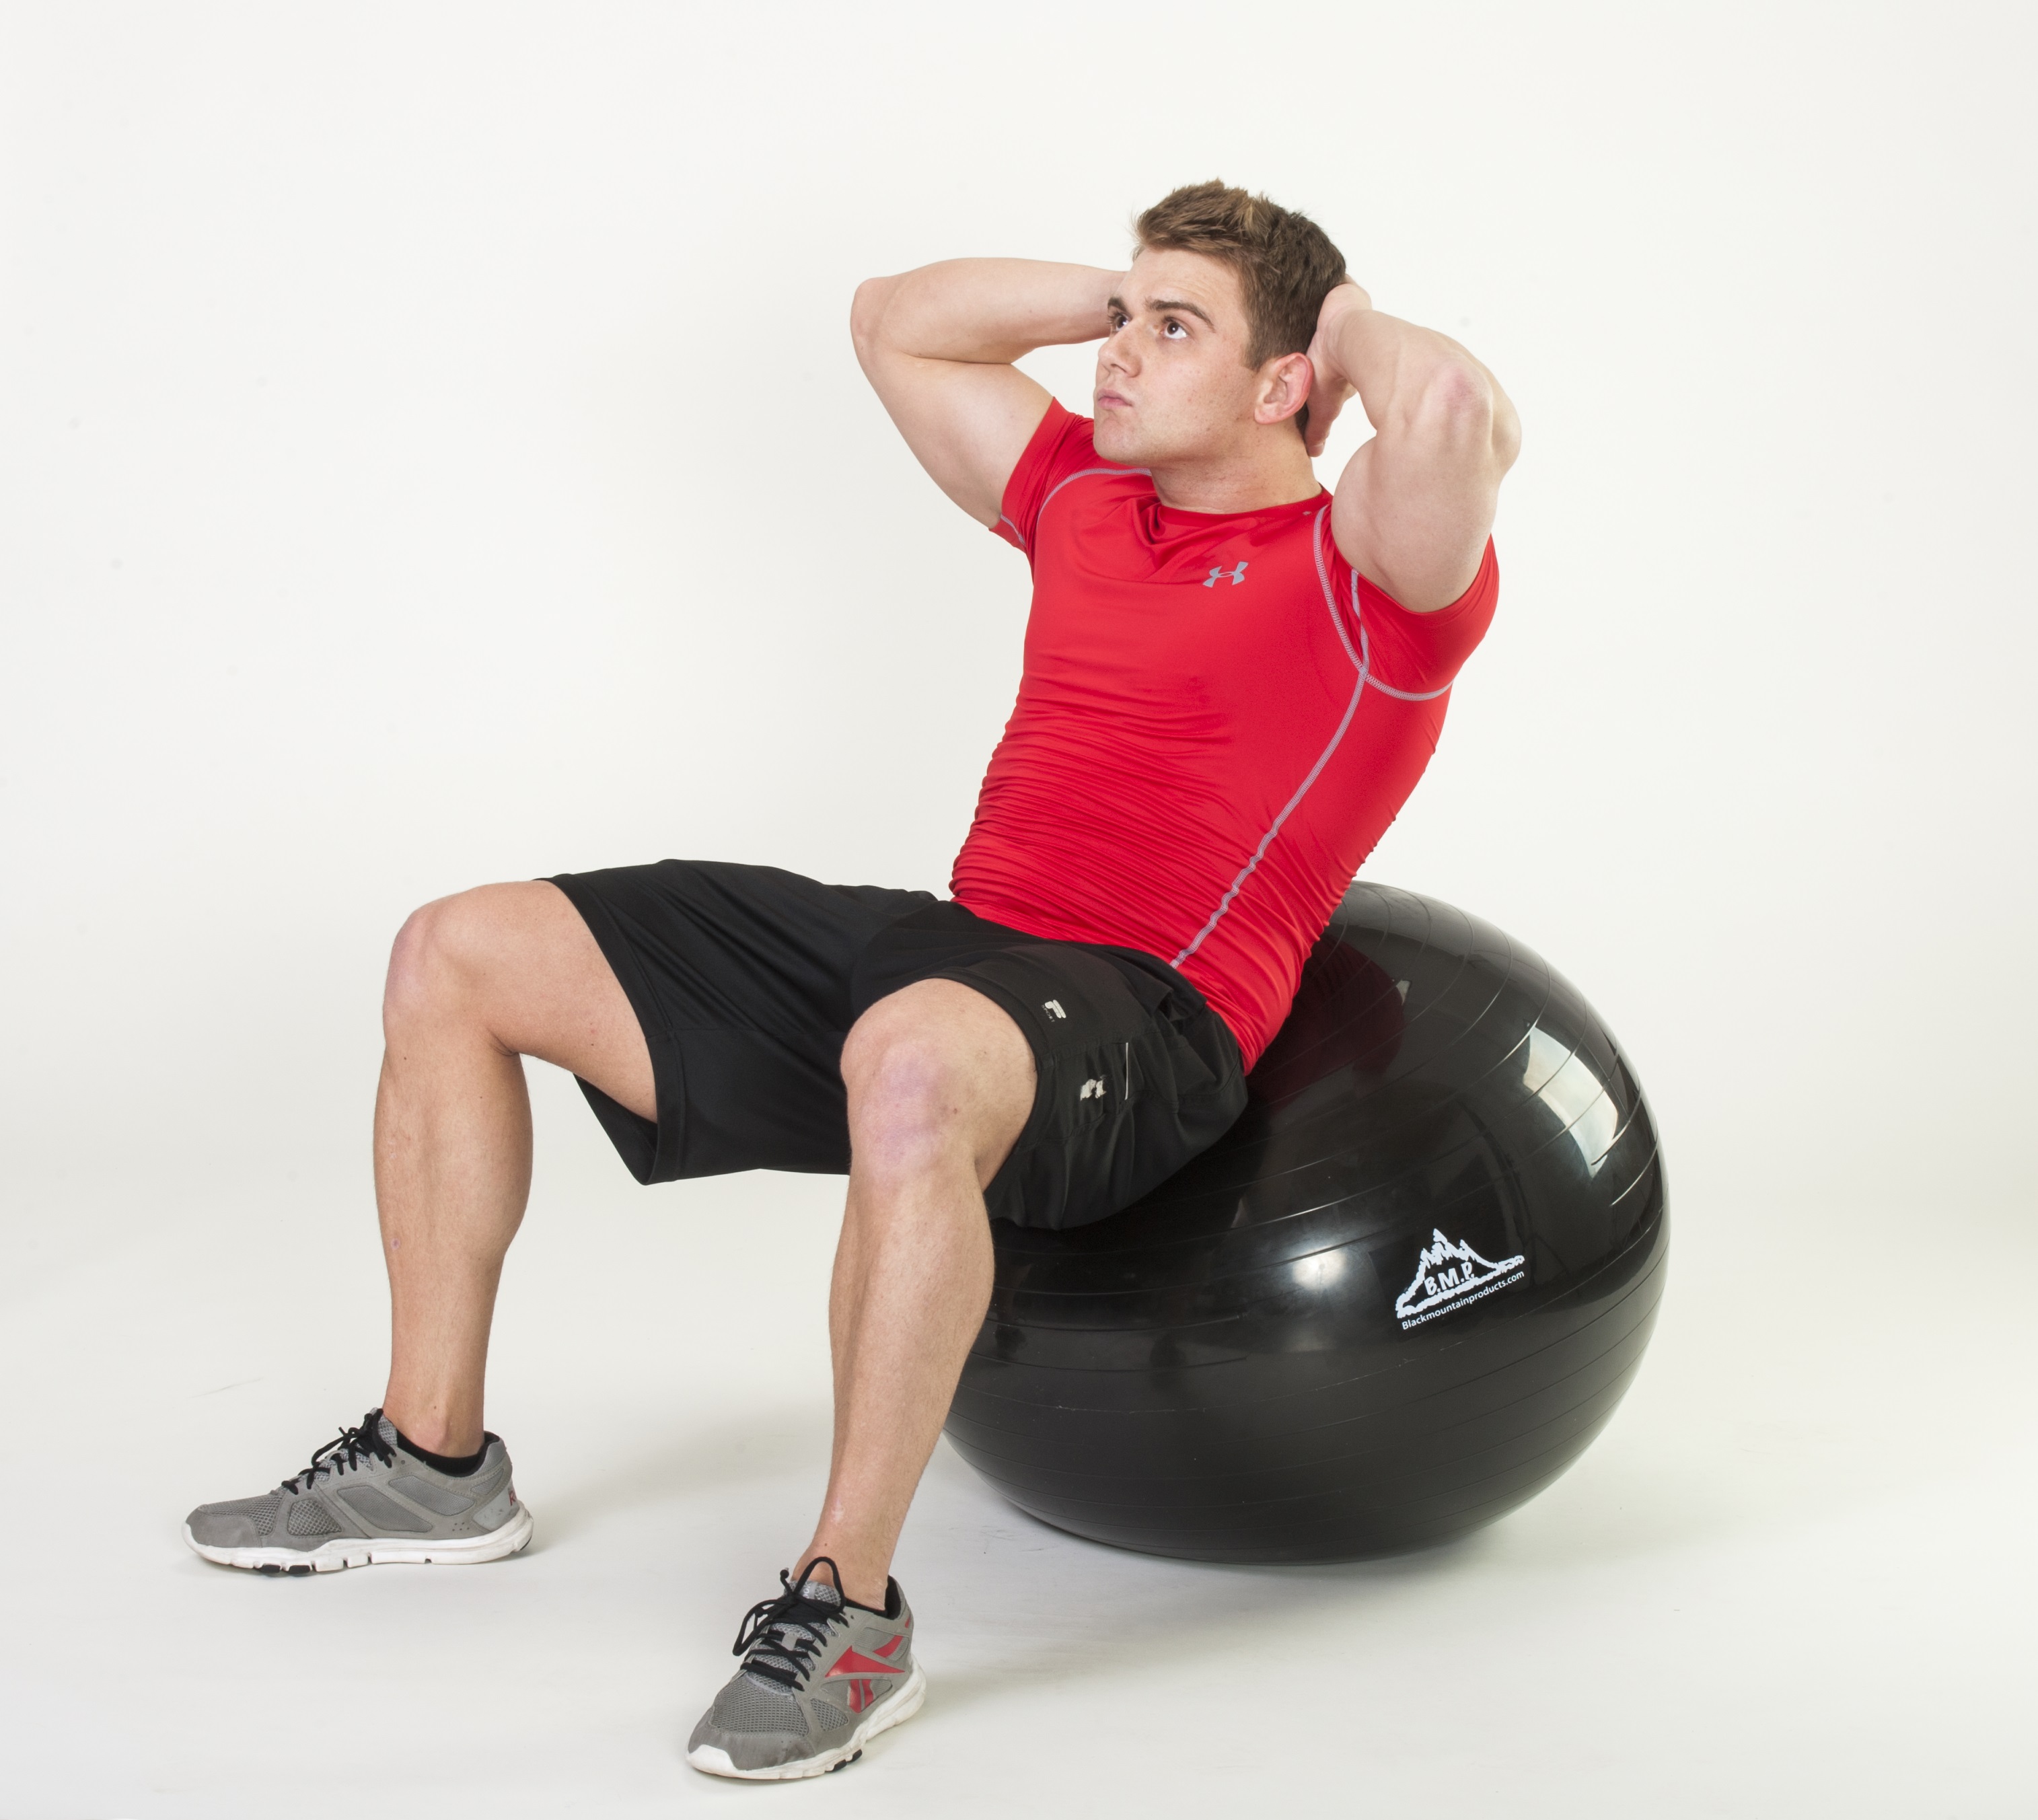 JBM Exercise Yoga Ball with Free Air Pump 200 lbs Slip-Resistant Yoga Balance Stability Swiss Ball